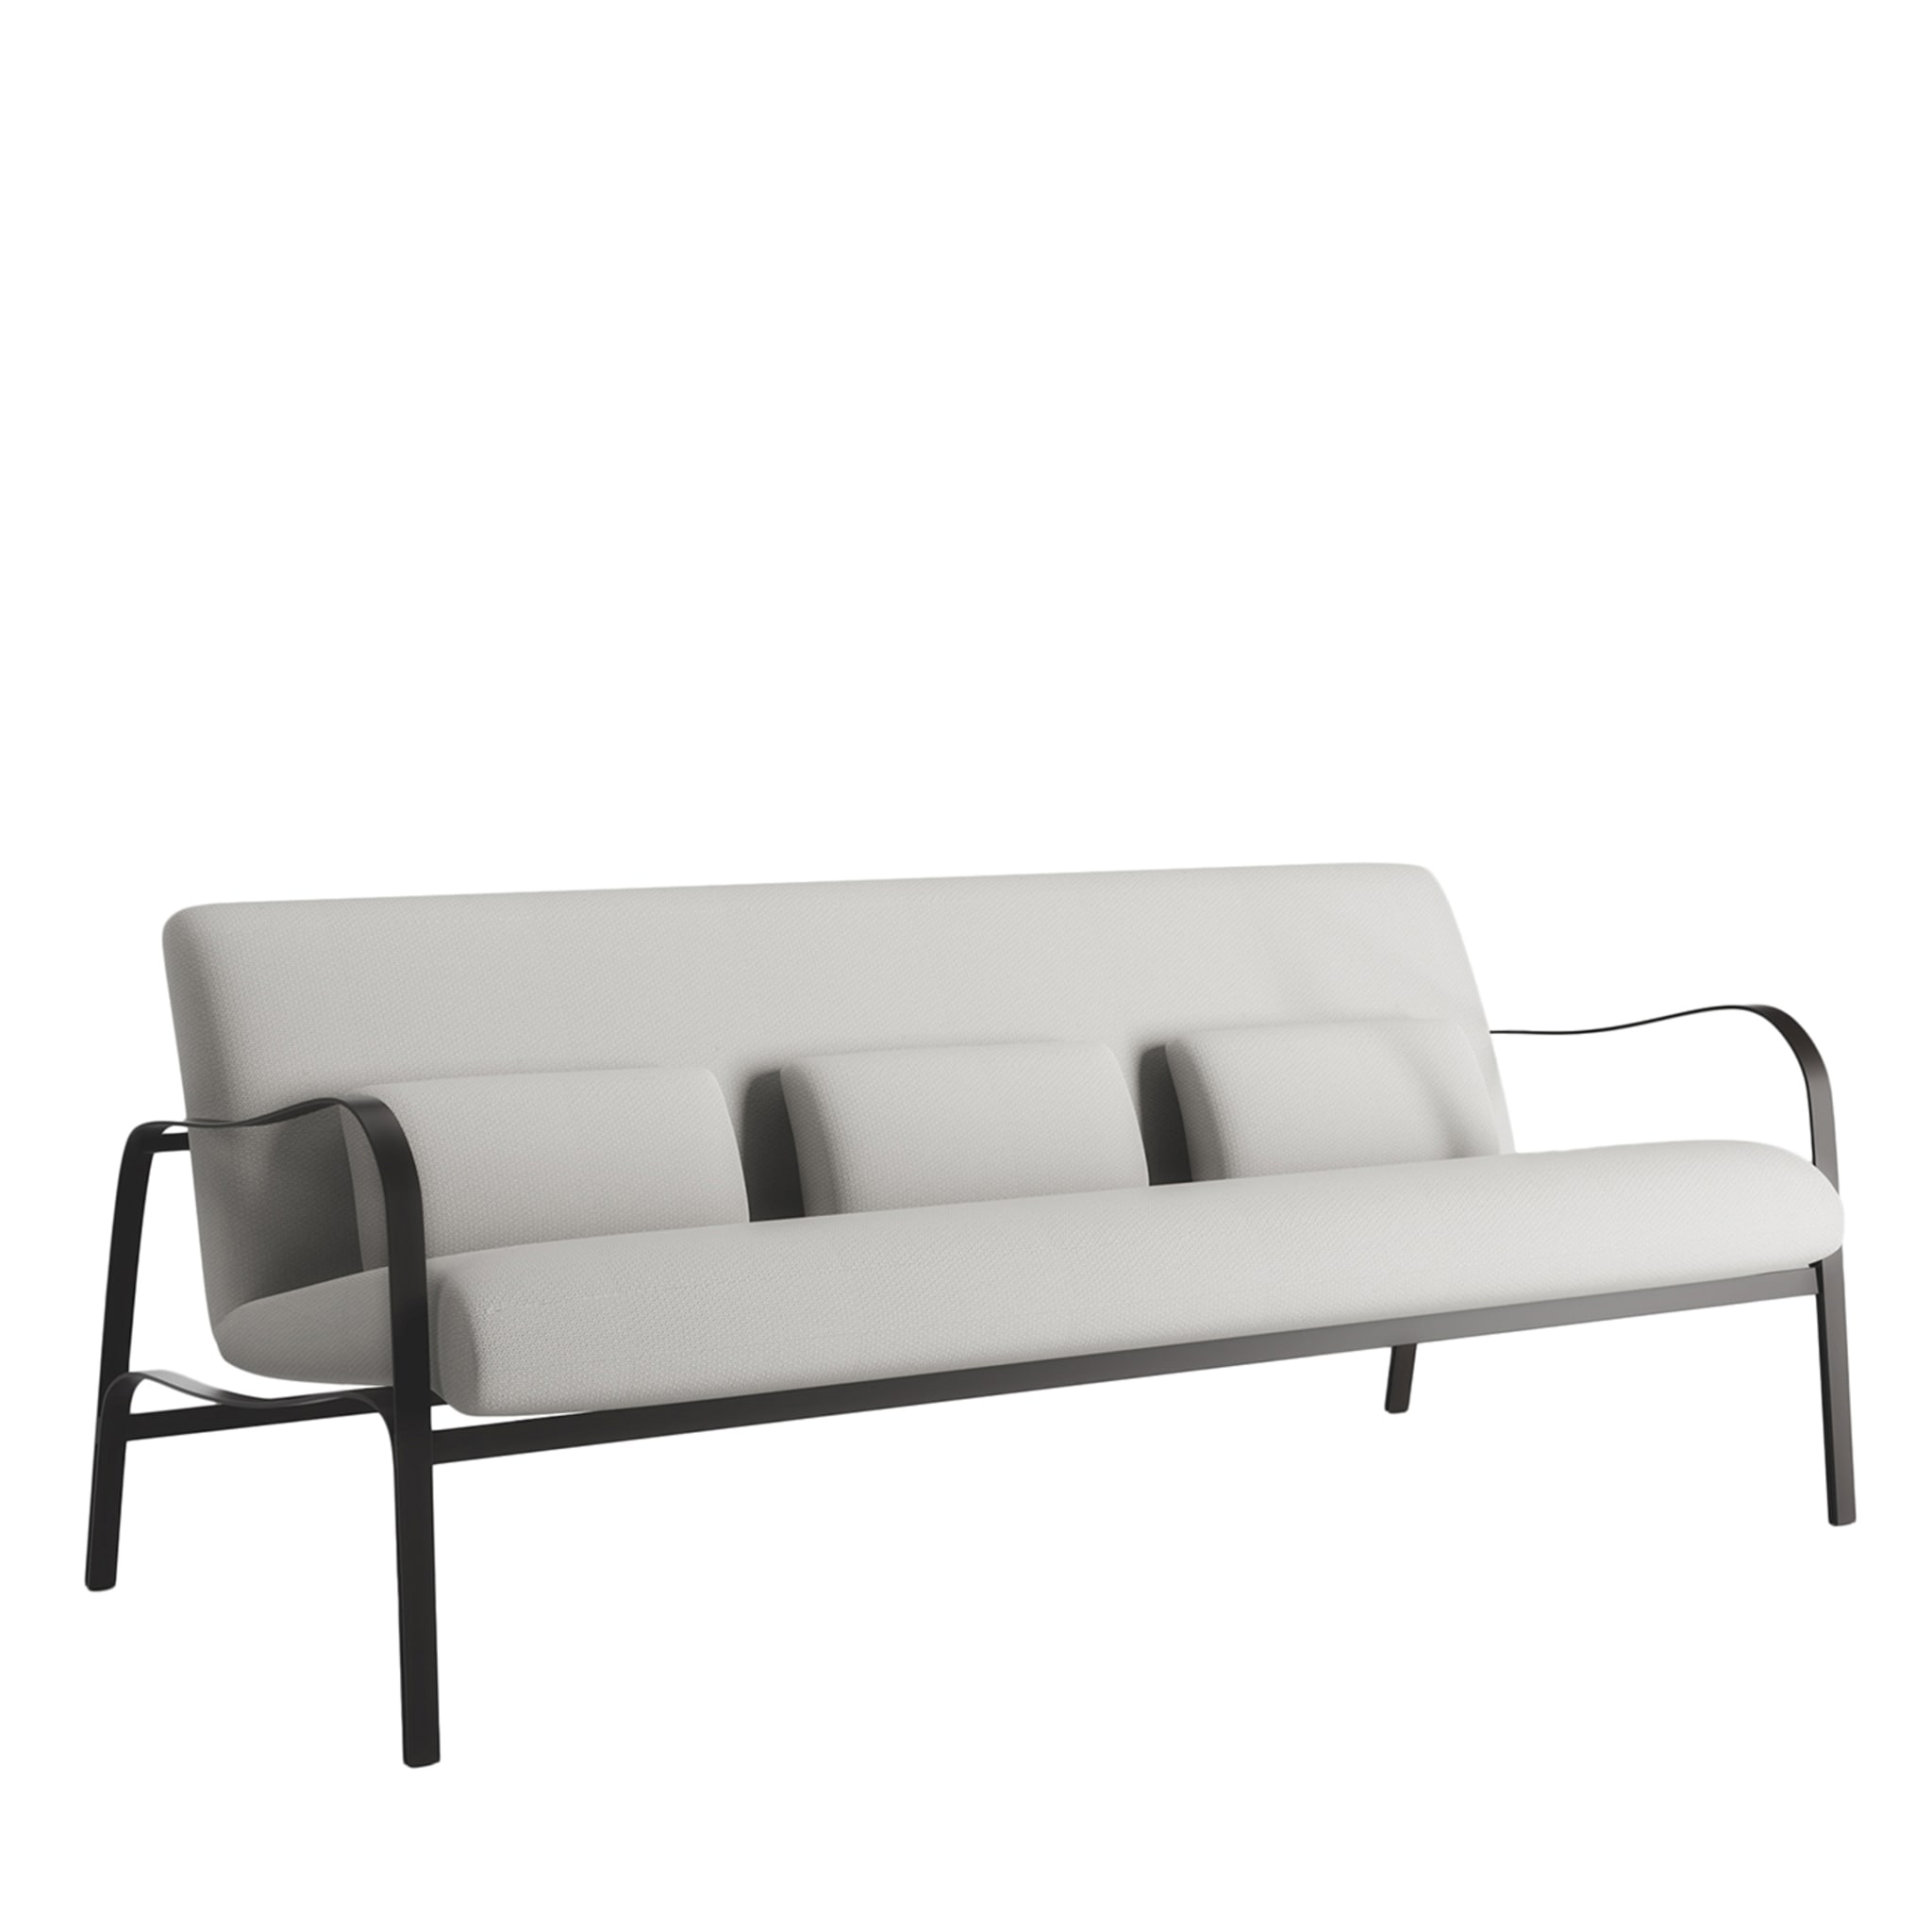 Amalfi White & Gray Sofa by Studio 63  - Main view